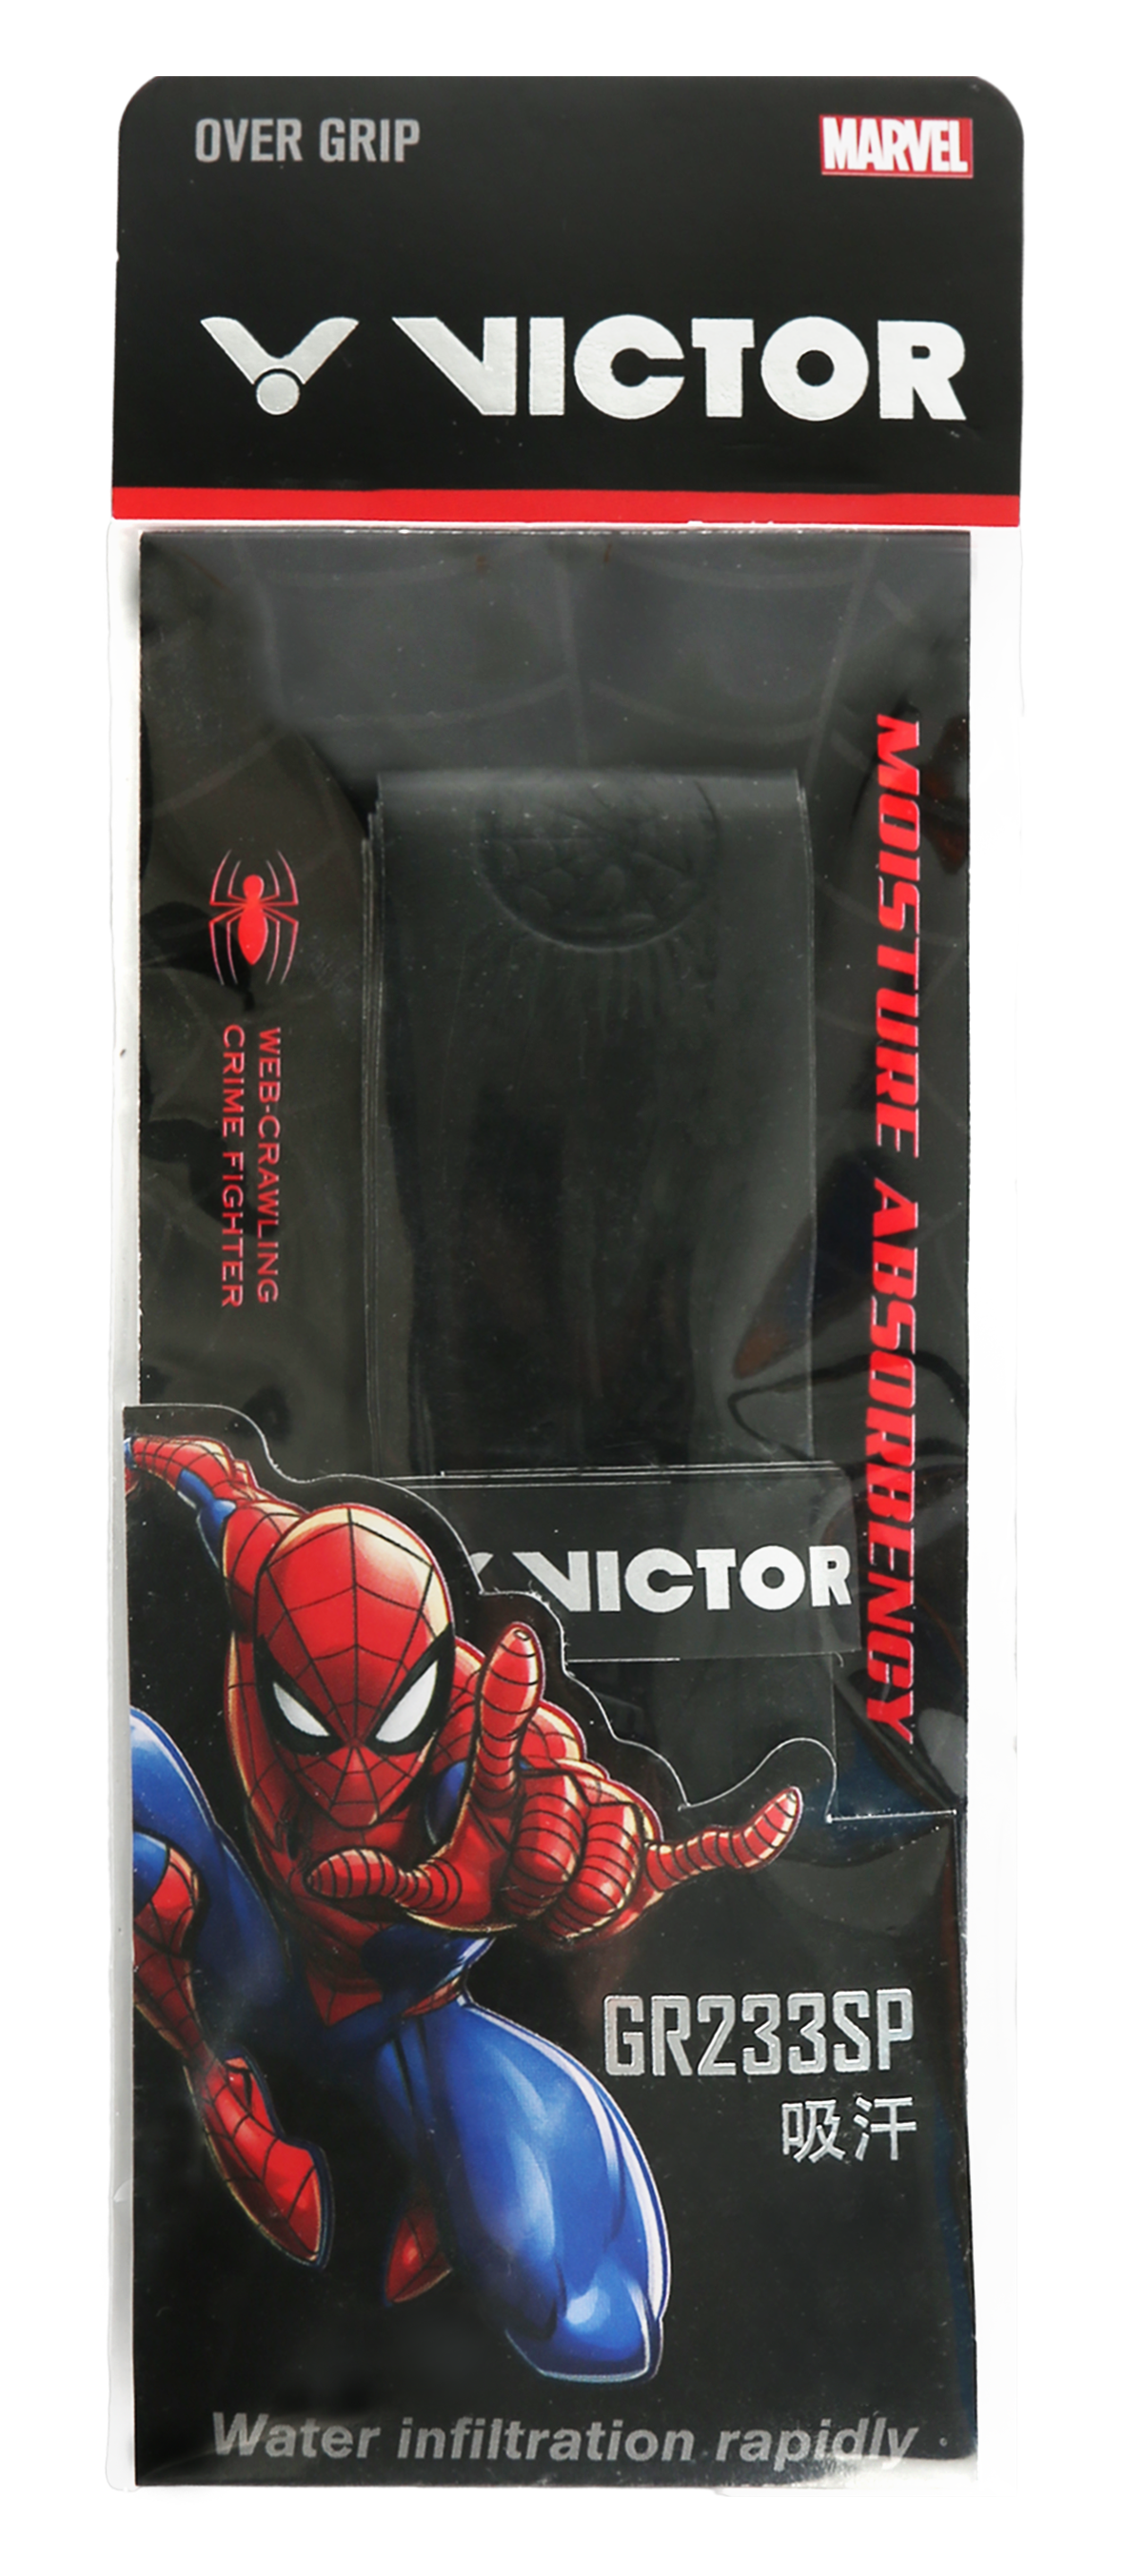 Victor Spider-Man Themed Limited Badminton Racket Set